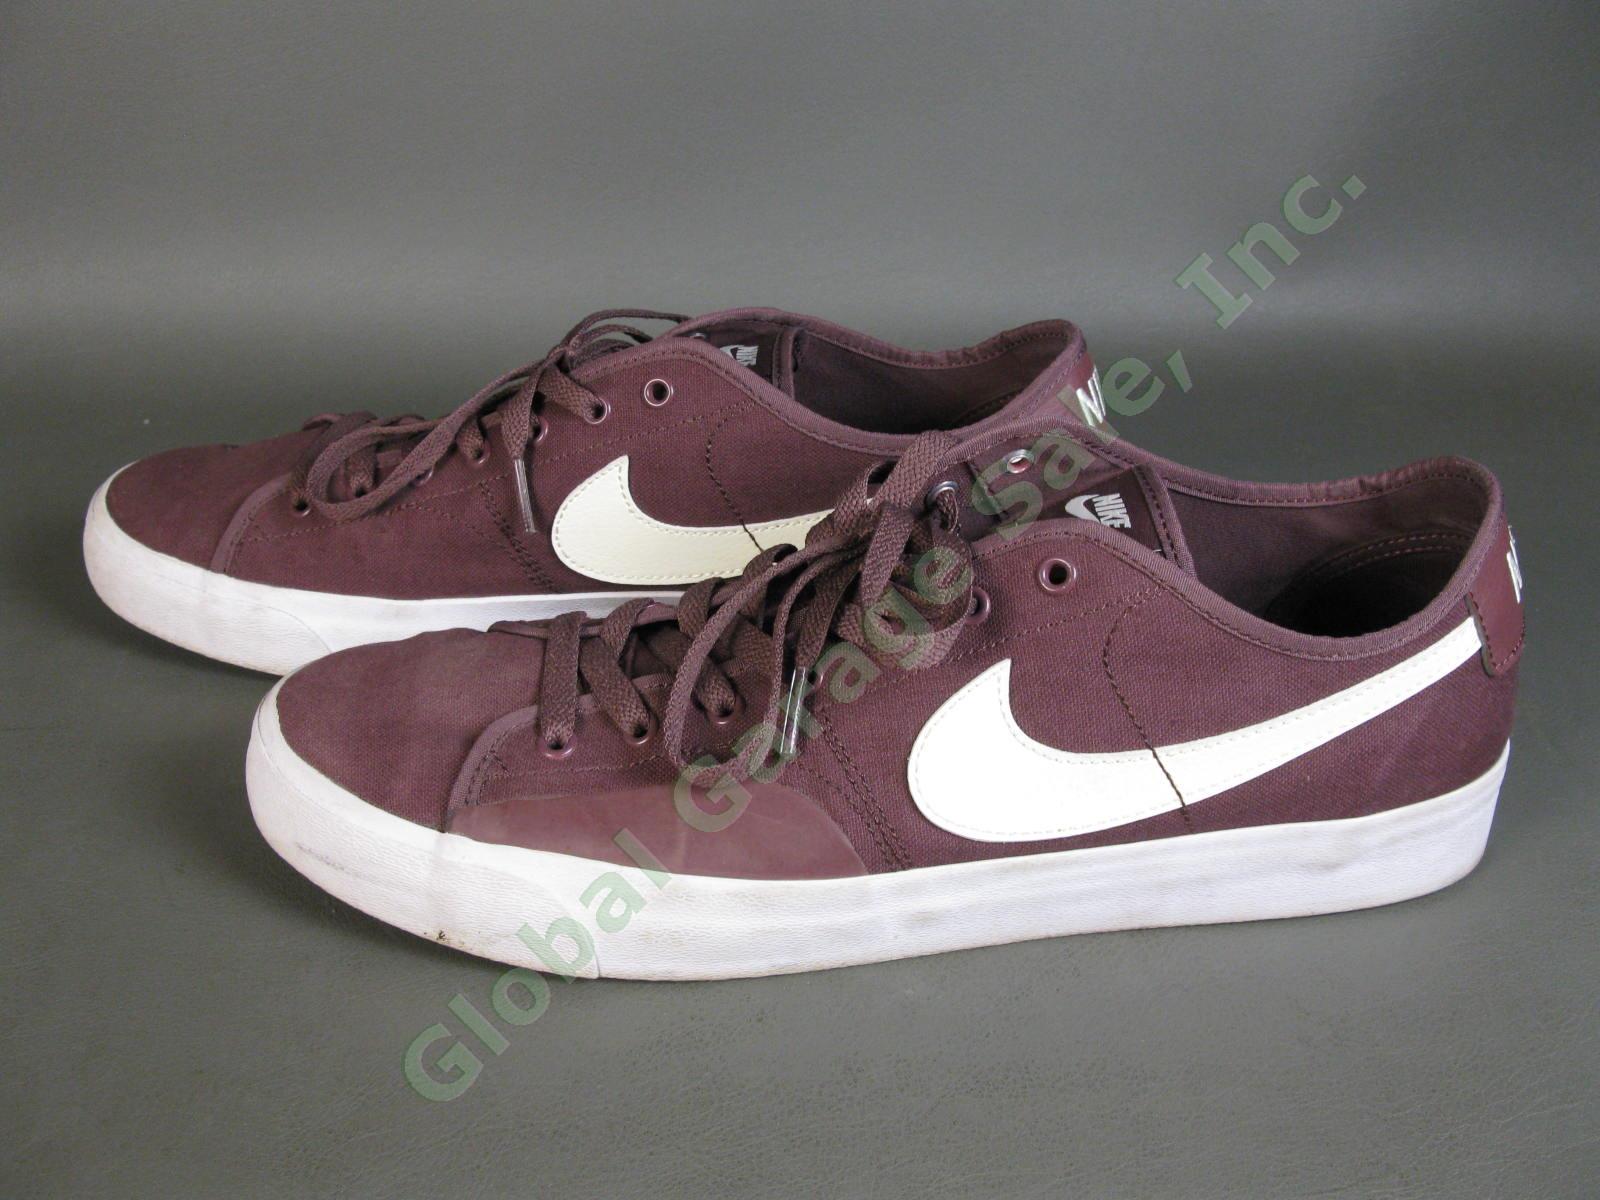 Nike SB Blazer Court Sneakers Shoes CV1658-601 Dark Wine Purple US Mens Size 12 2